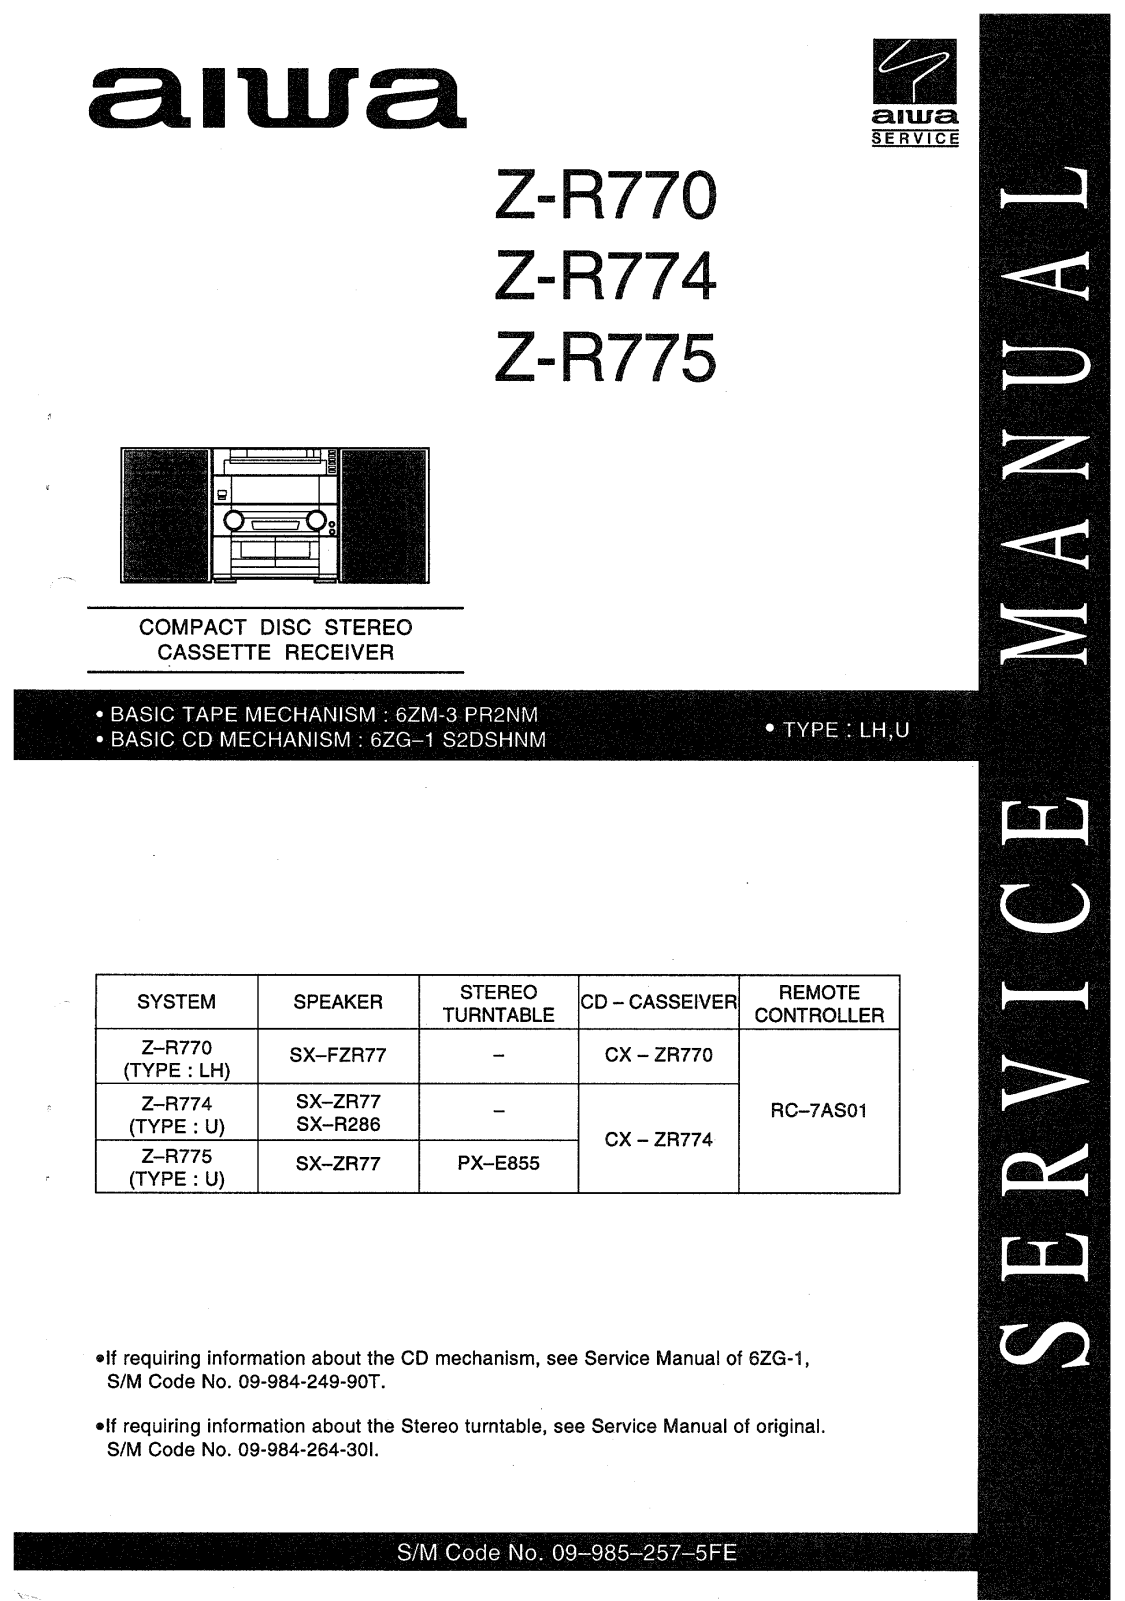 Aiwa z-r770, z-r774, z-r775 User Manual